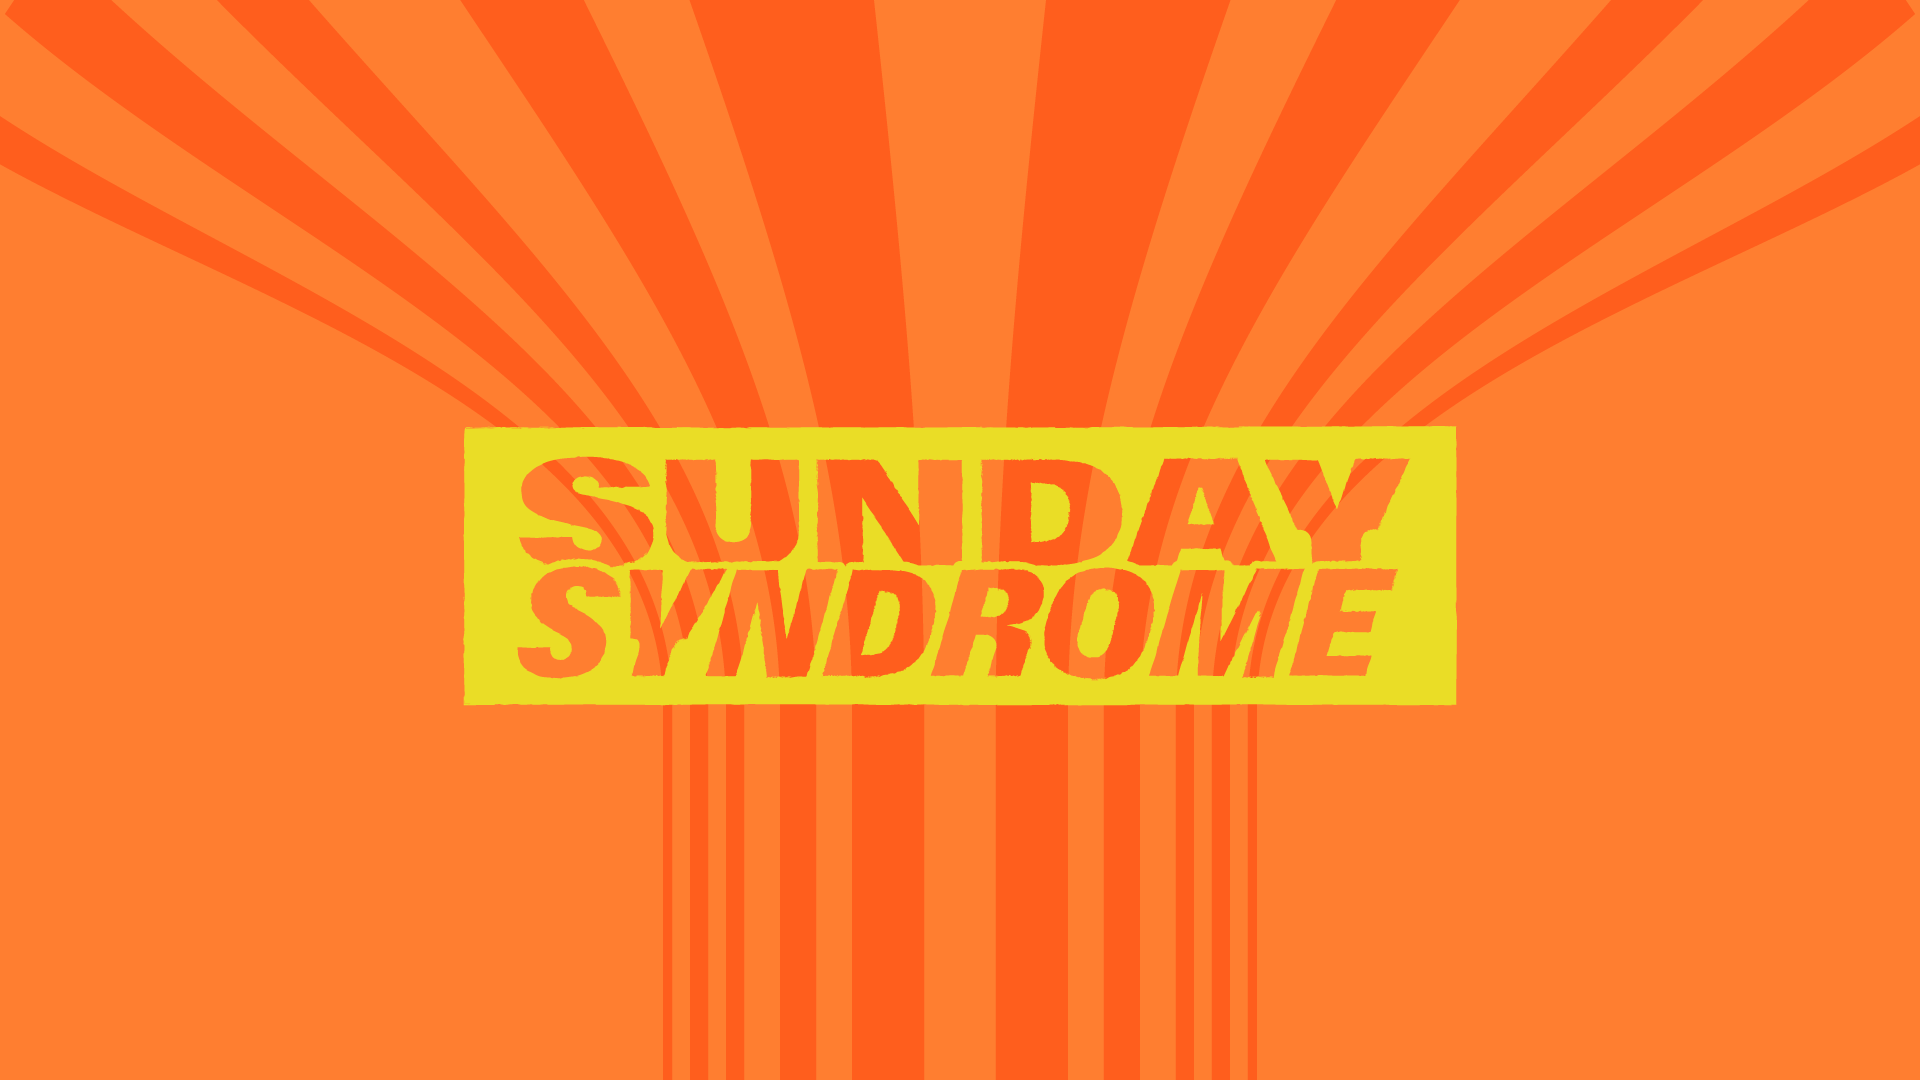 Sunday syndrome